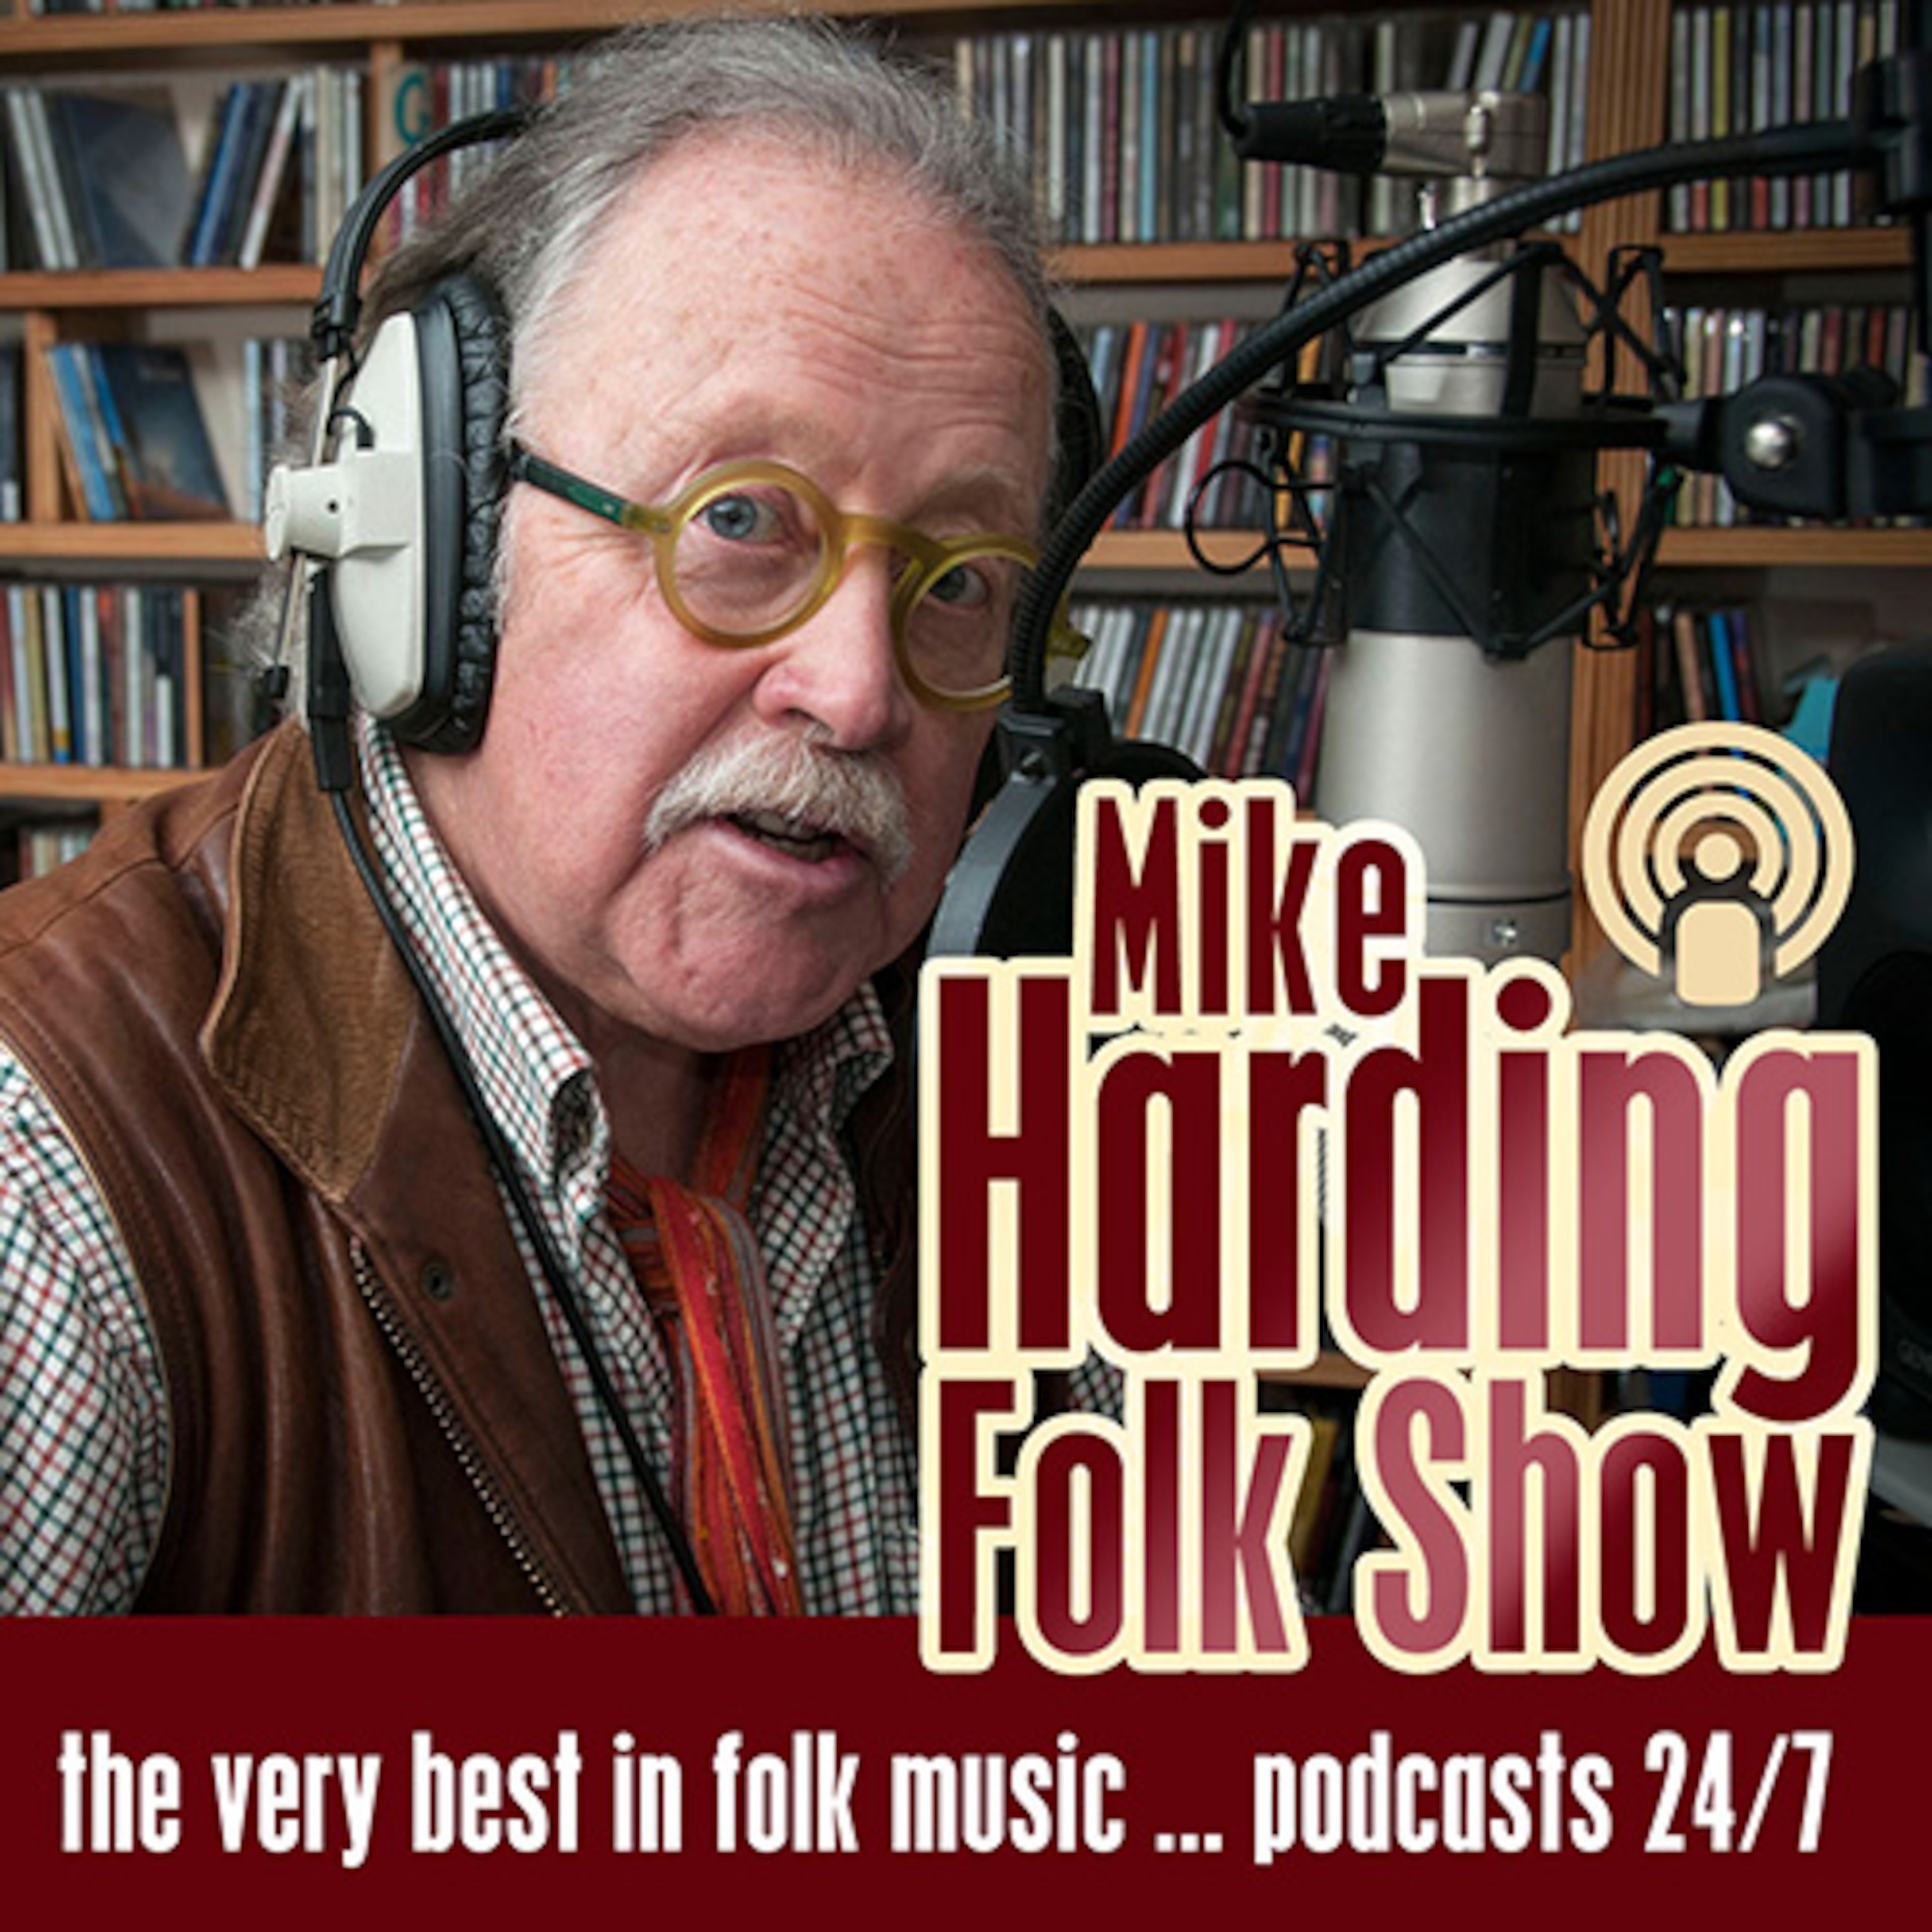 Mike Harding Folk Show 153